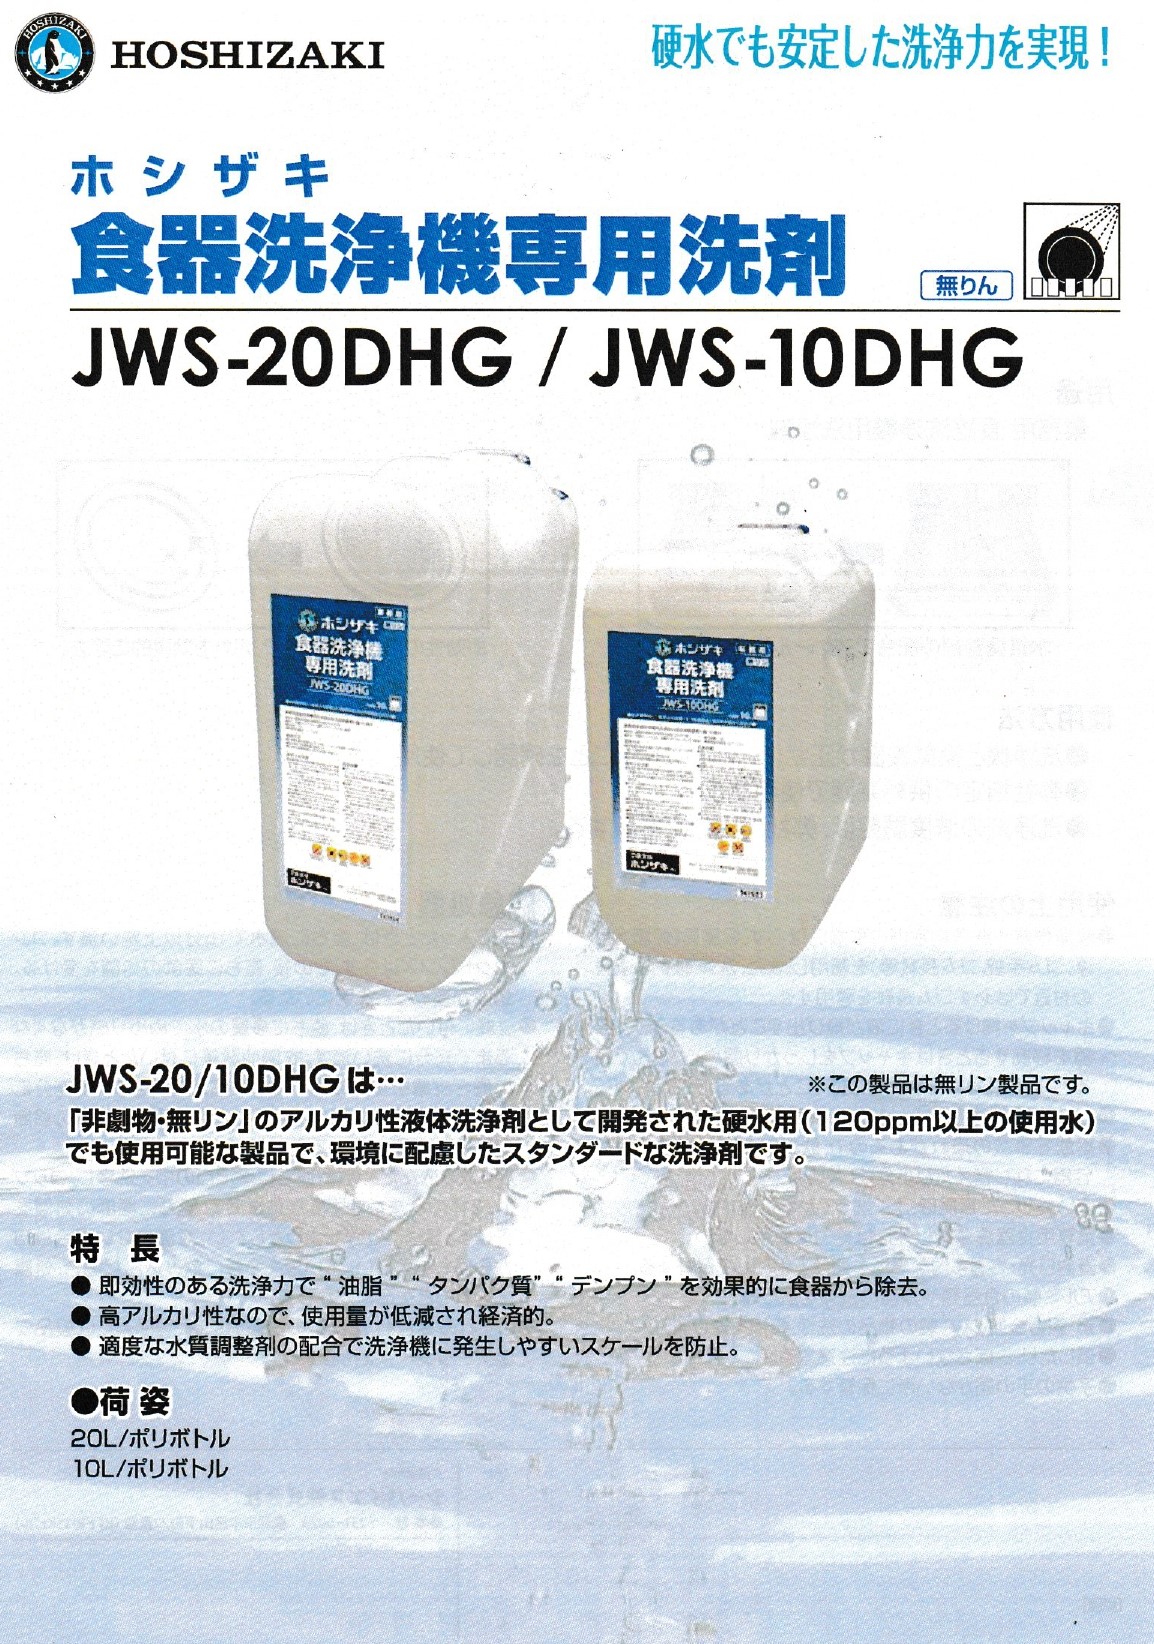 ホシザキ (HOSHIZAKI) 食器洗浄機用洗剤 10L×2 JWS-10DHG : jws-10dhg 